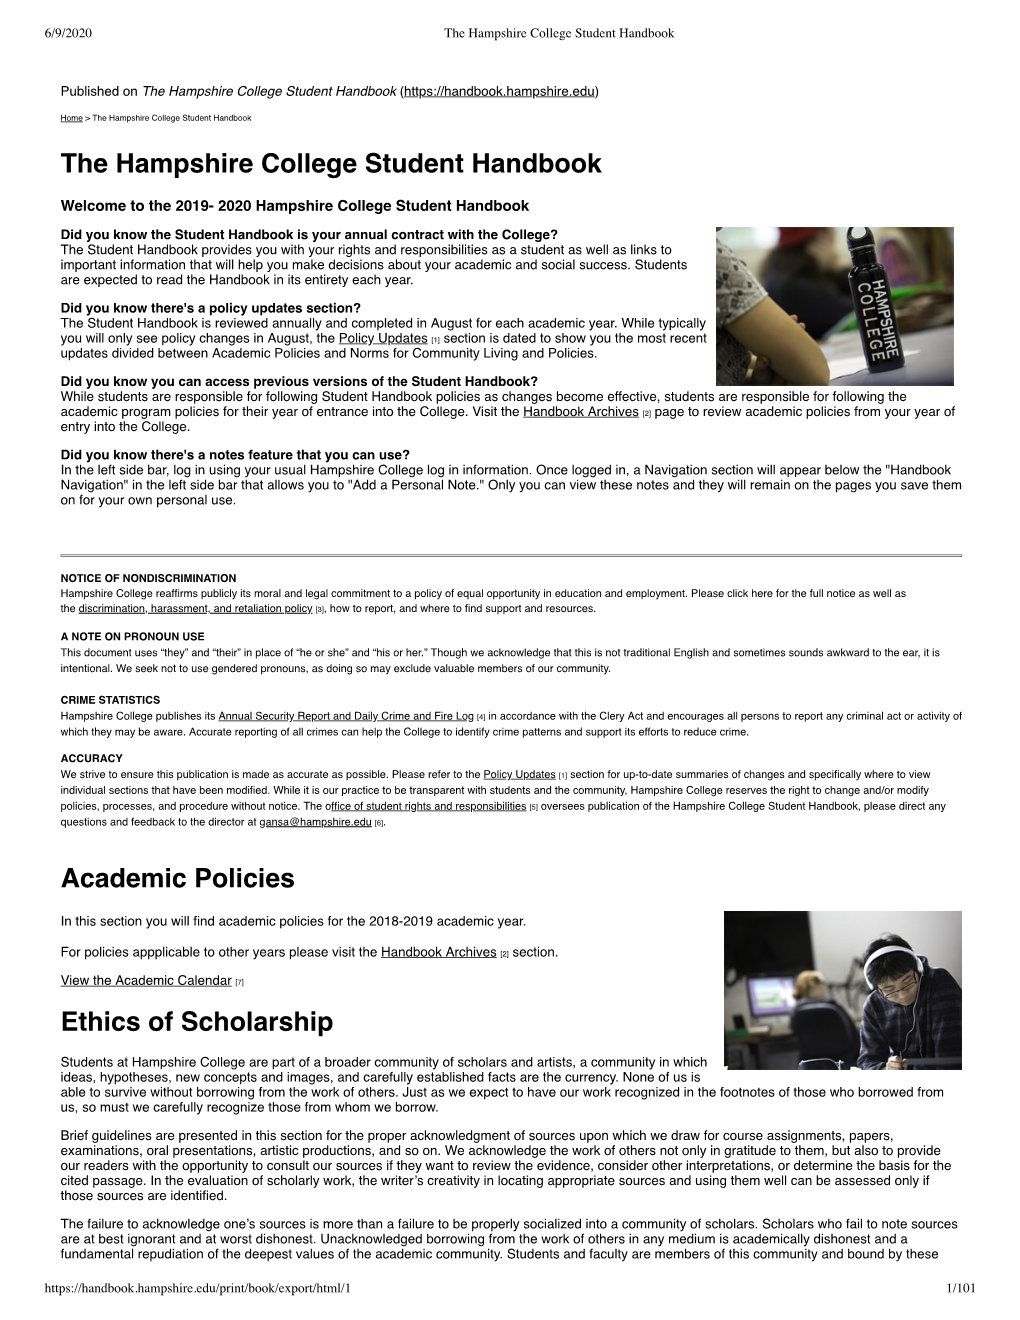 The Hampshire College Student Handbook Academic Policies Ethics of Scholarship